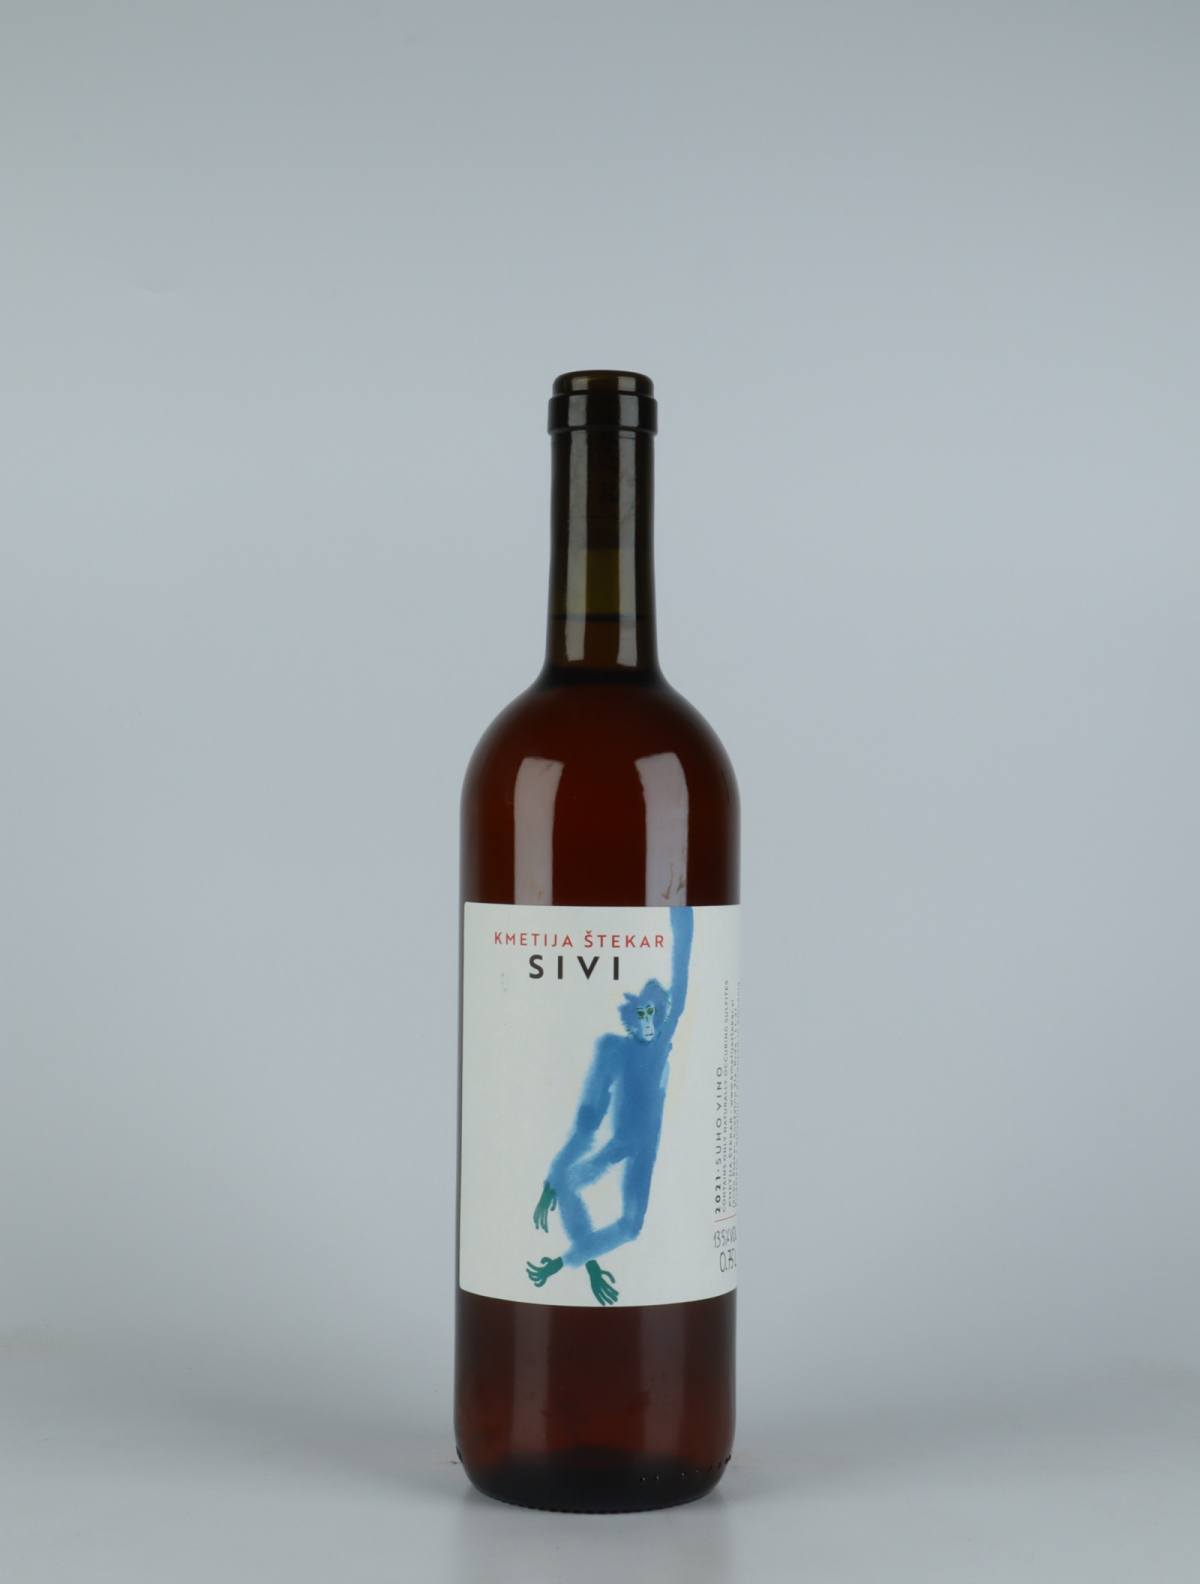 En flaske 2021 Sivi Orange vin fra Kmetija Stekar, Brda i Slovenien